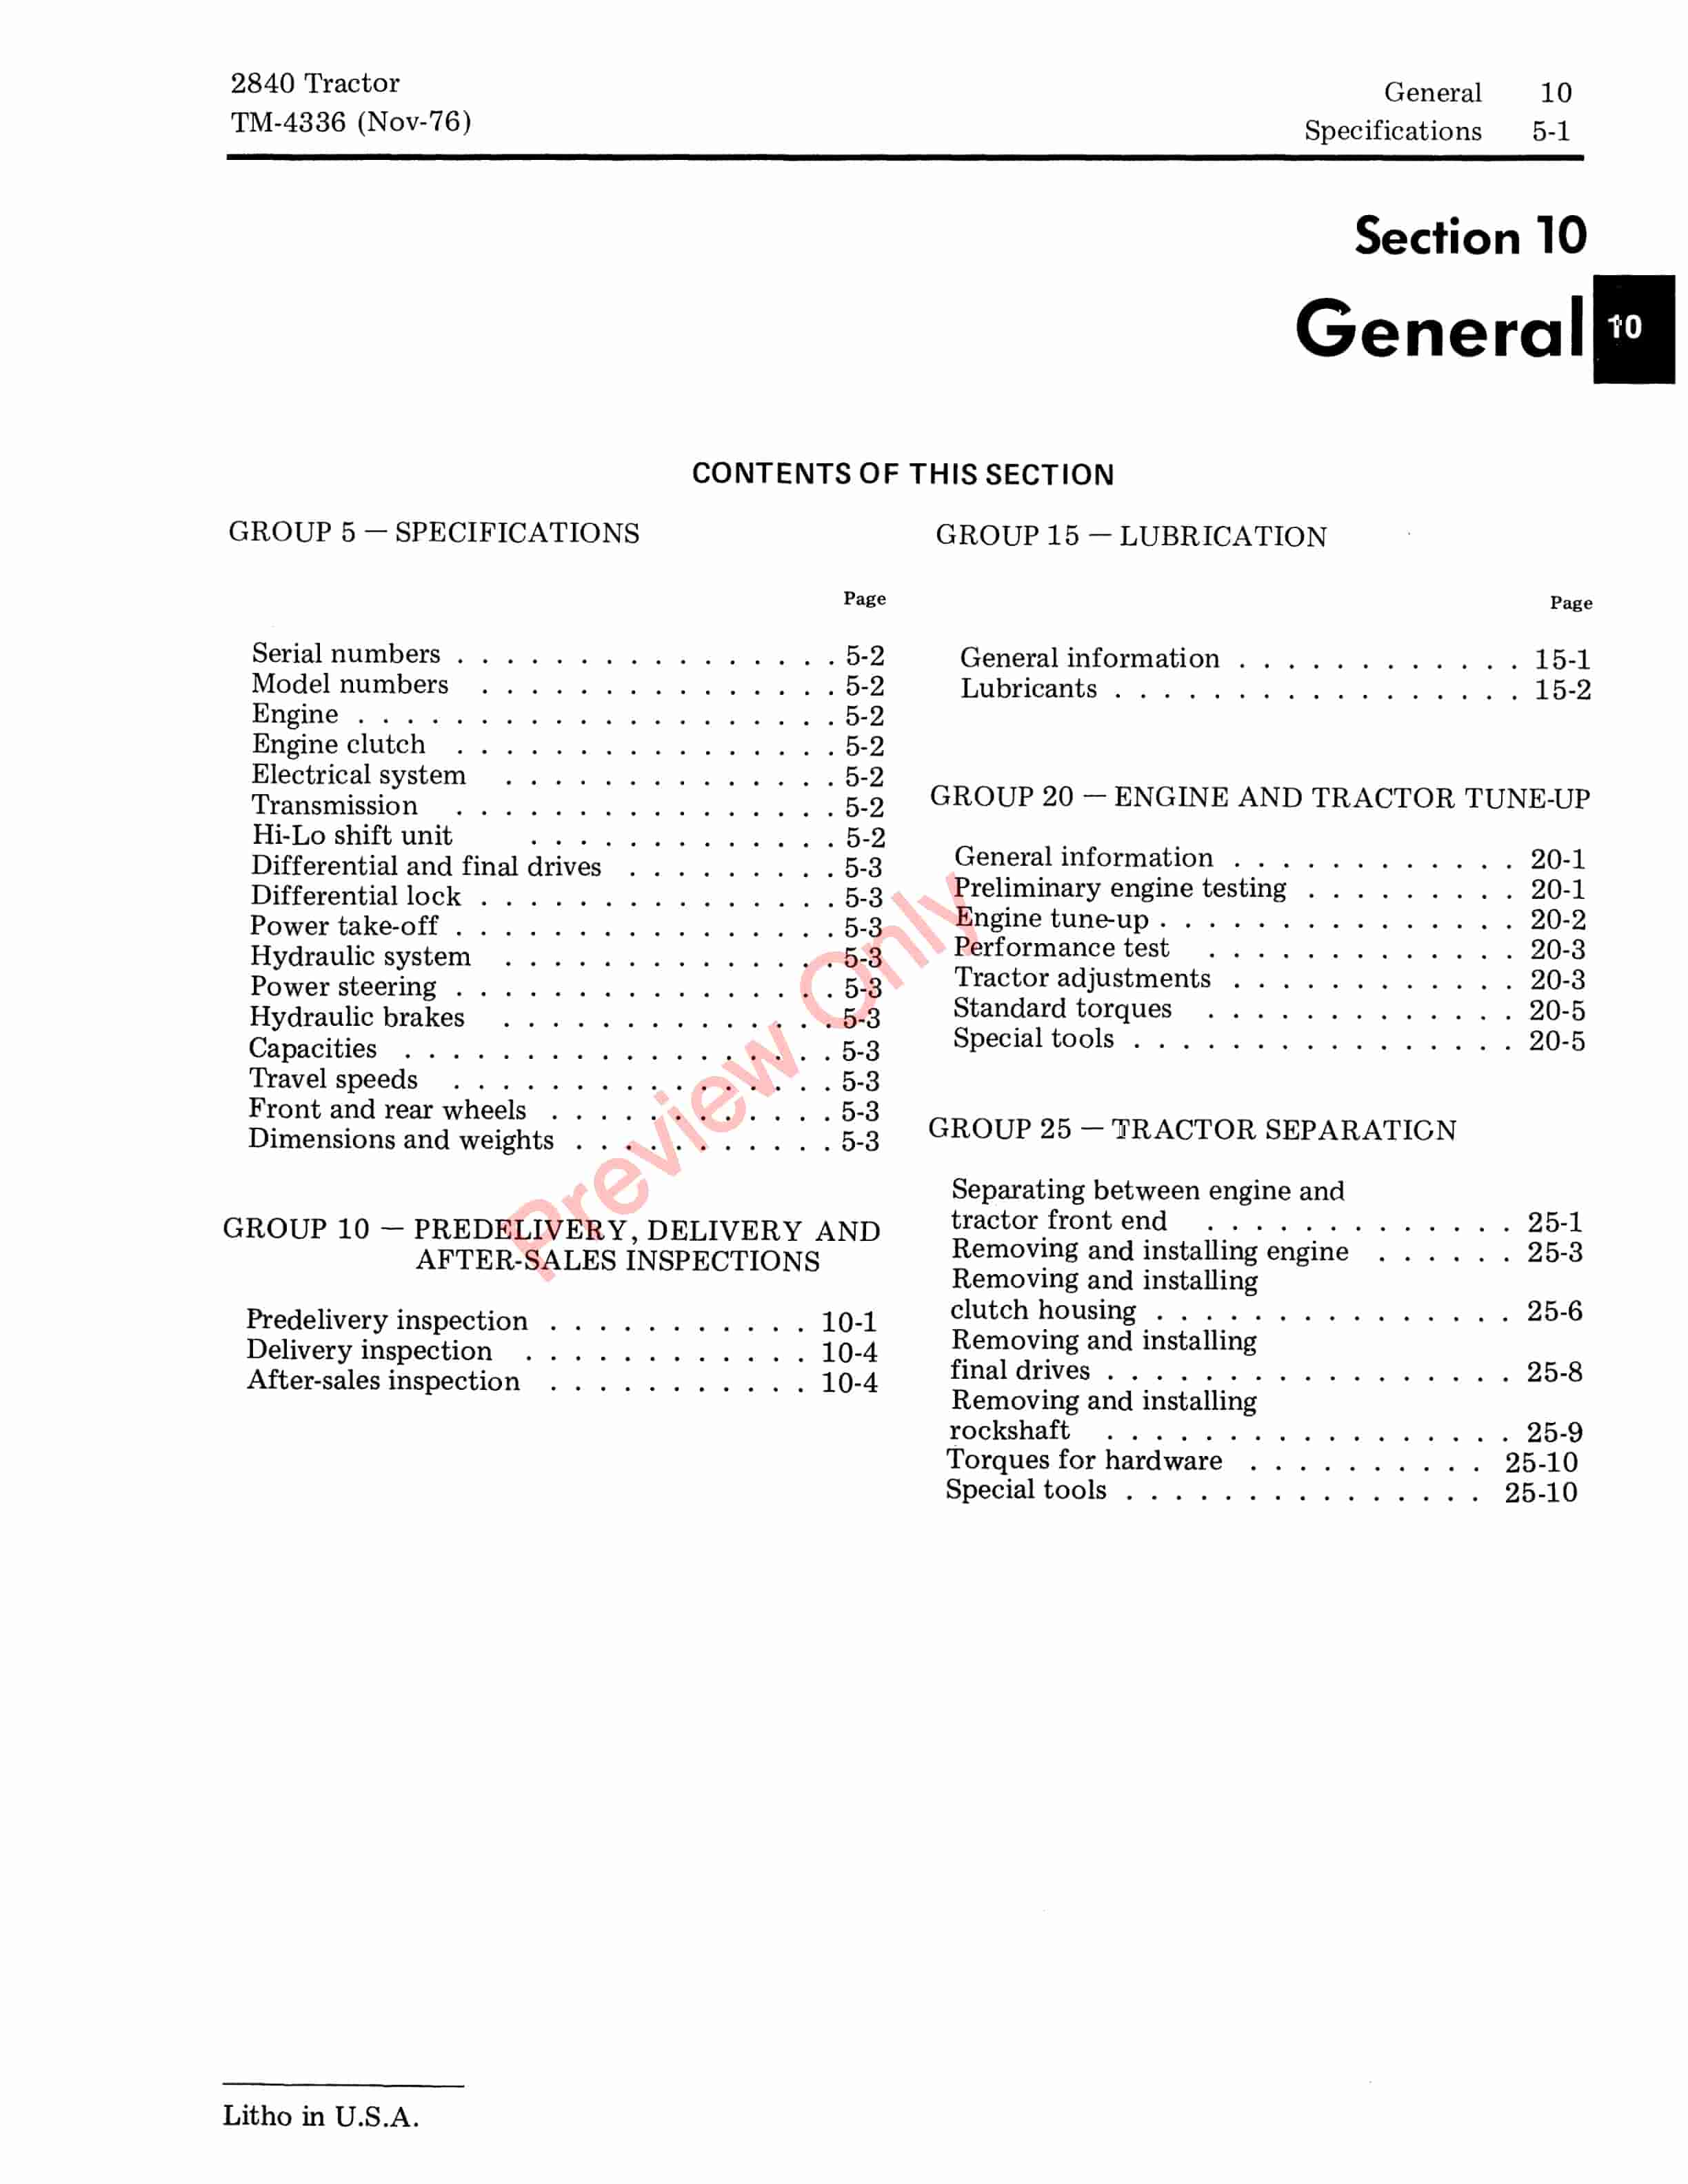 John Deere 2840 Utility Tractor Technical Manual TM4336 01MAY79 5